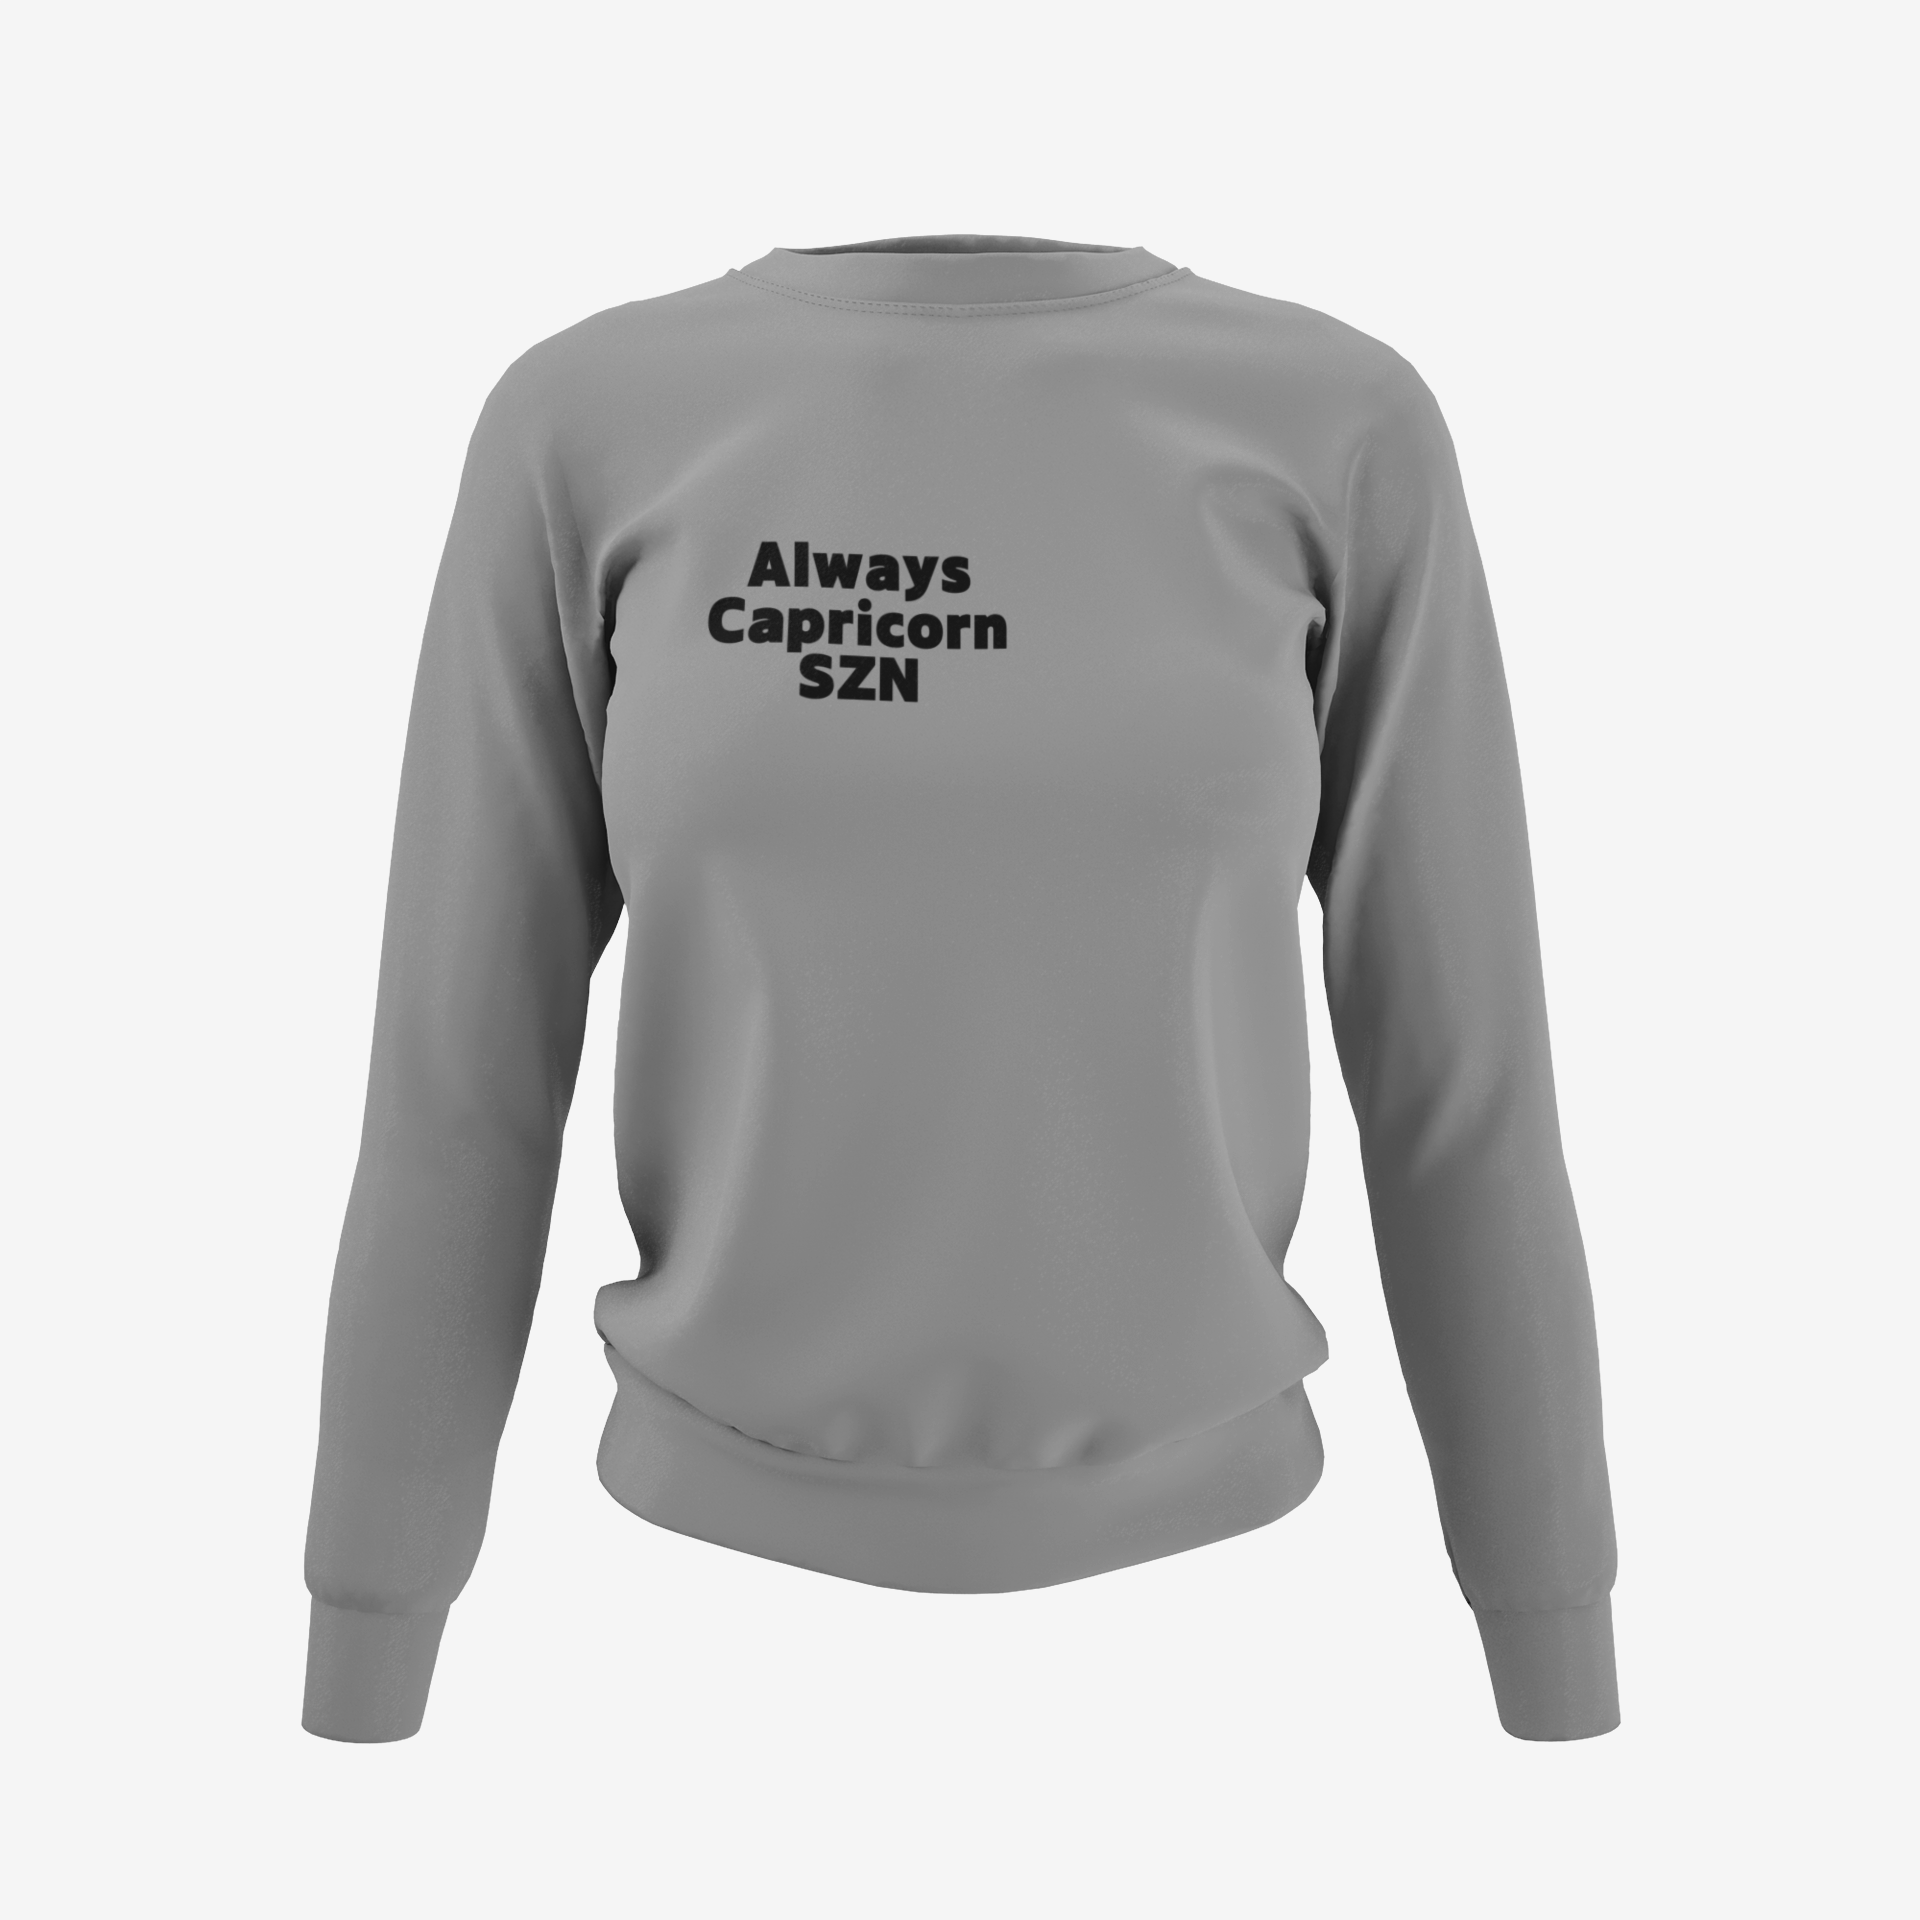 Capricorn SZN Sweatshirt